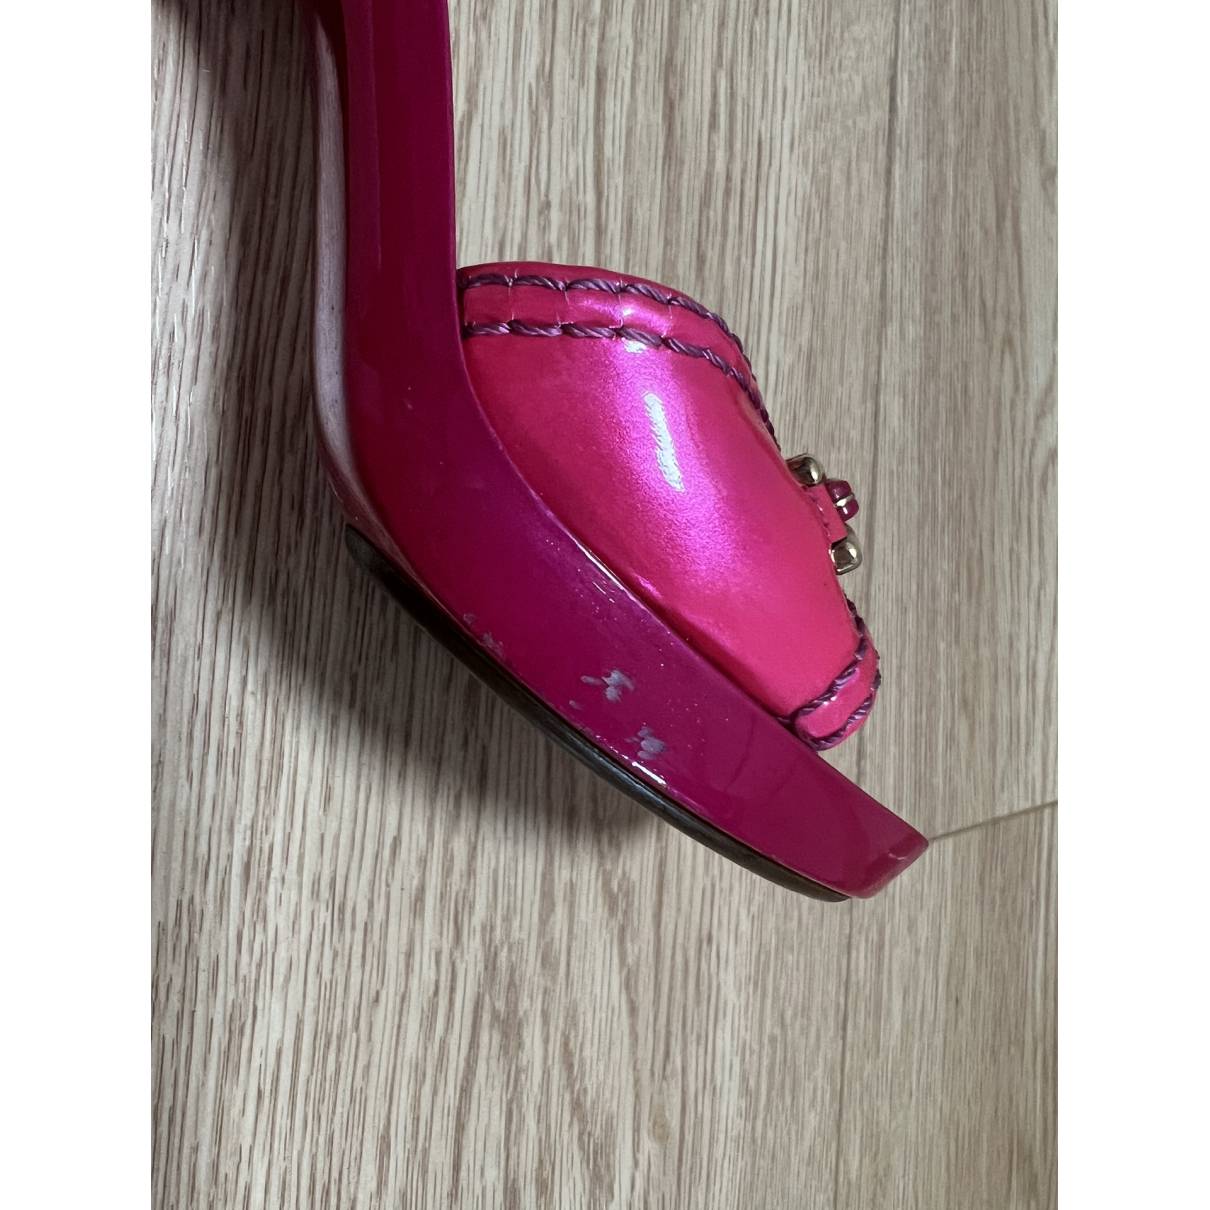 Authentic Louis Vuitton Mules Slides Pink Patent Leather Dice Heel Sandals  36.5